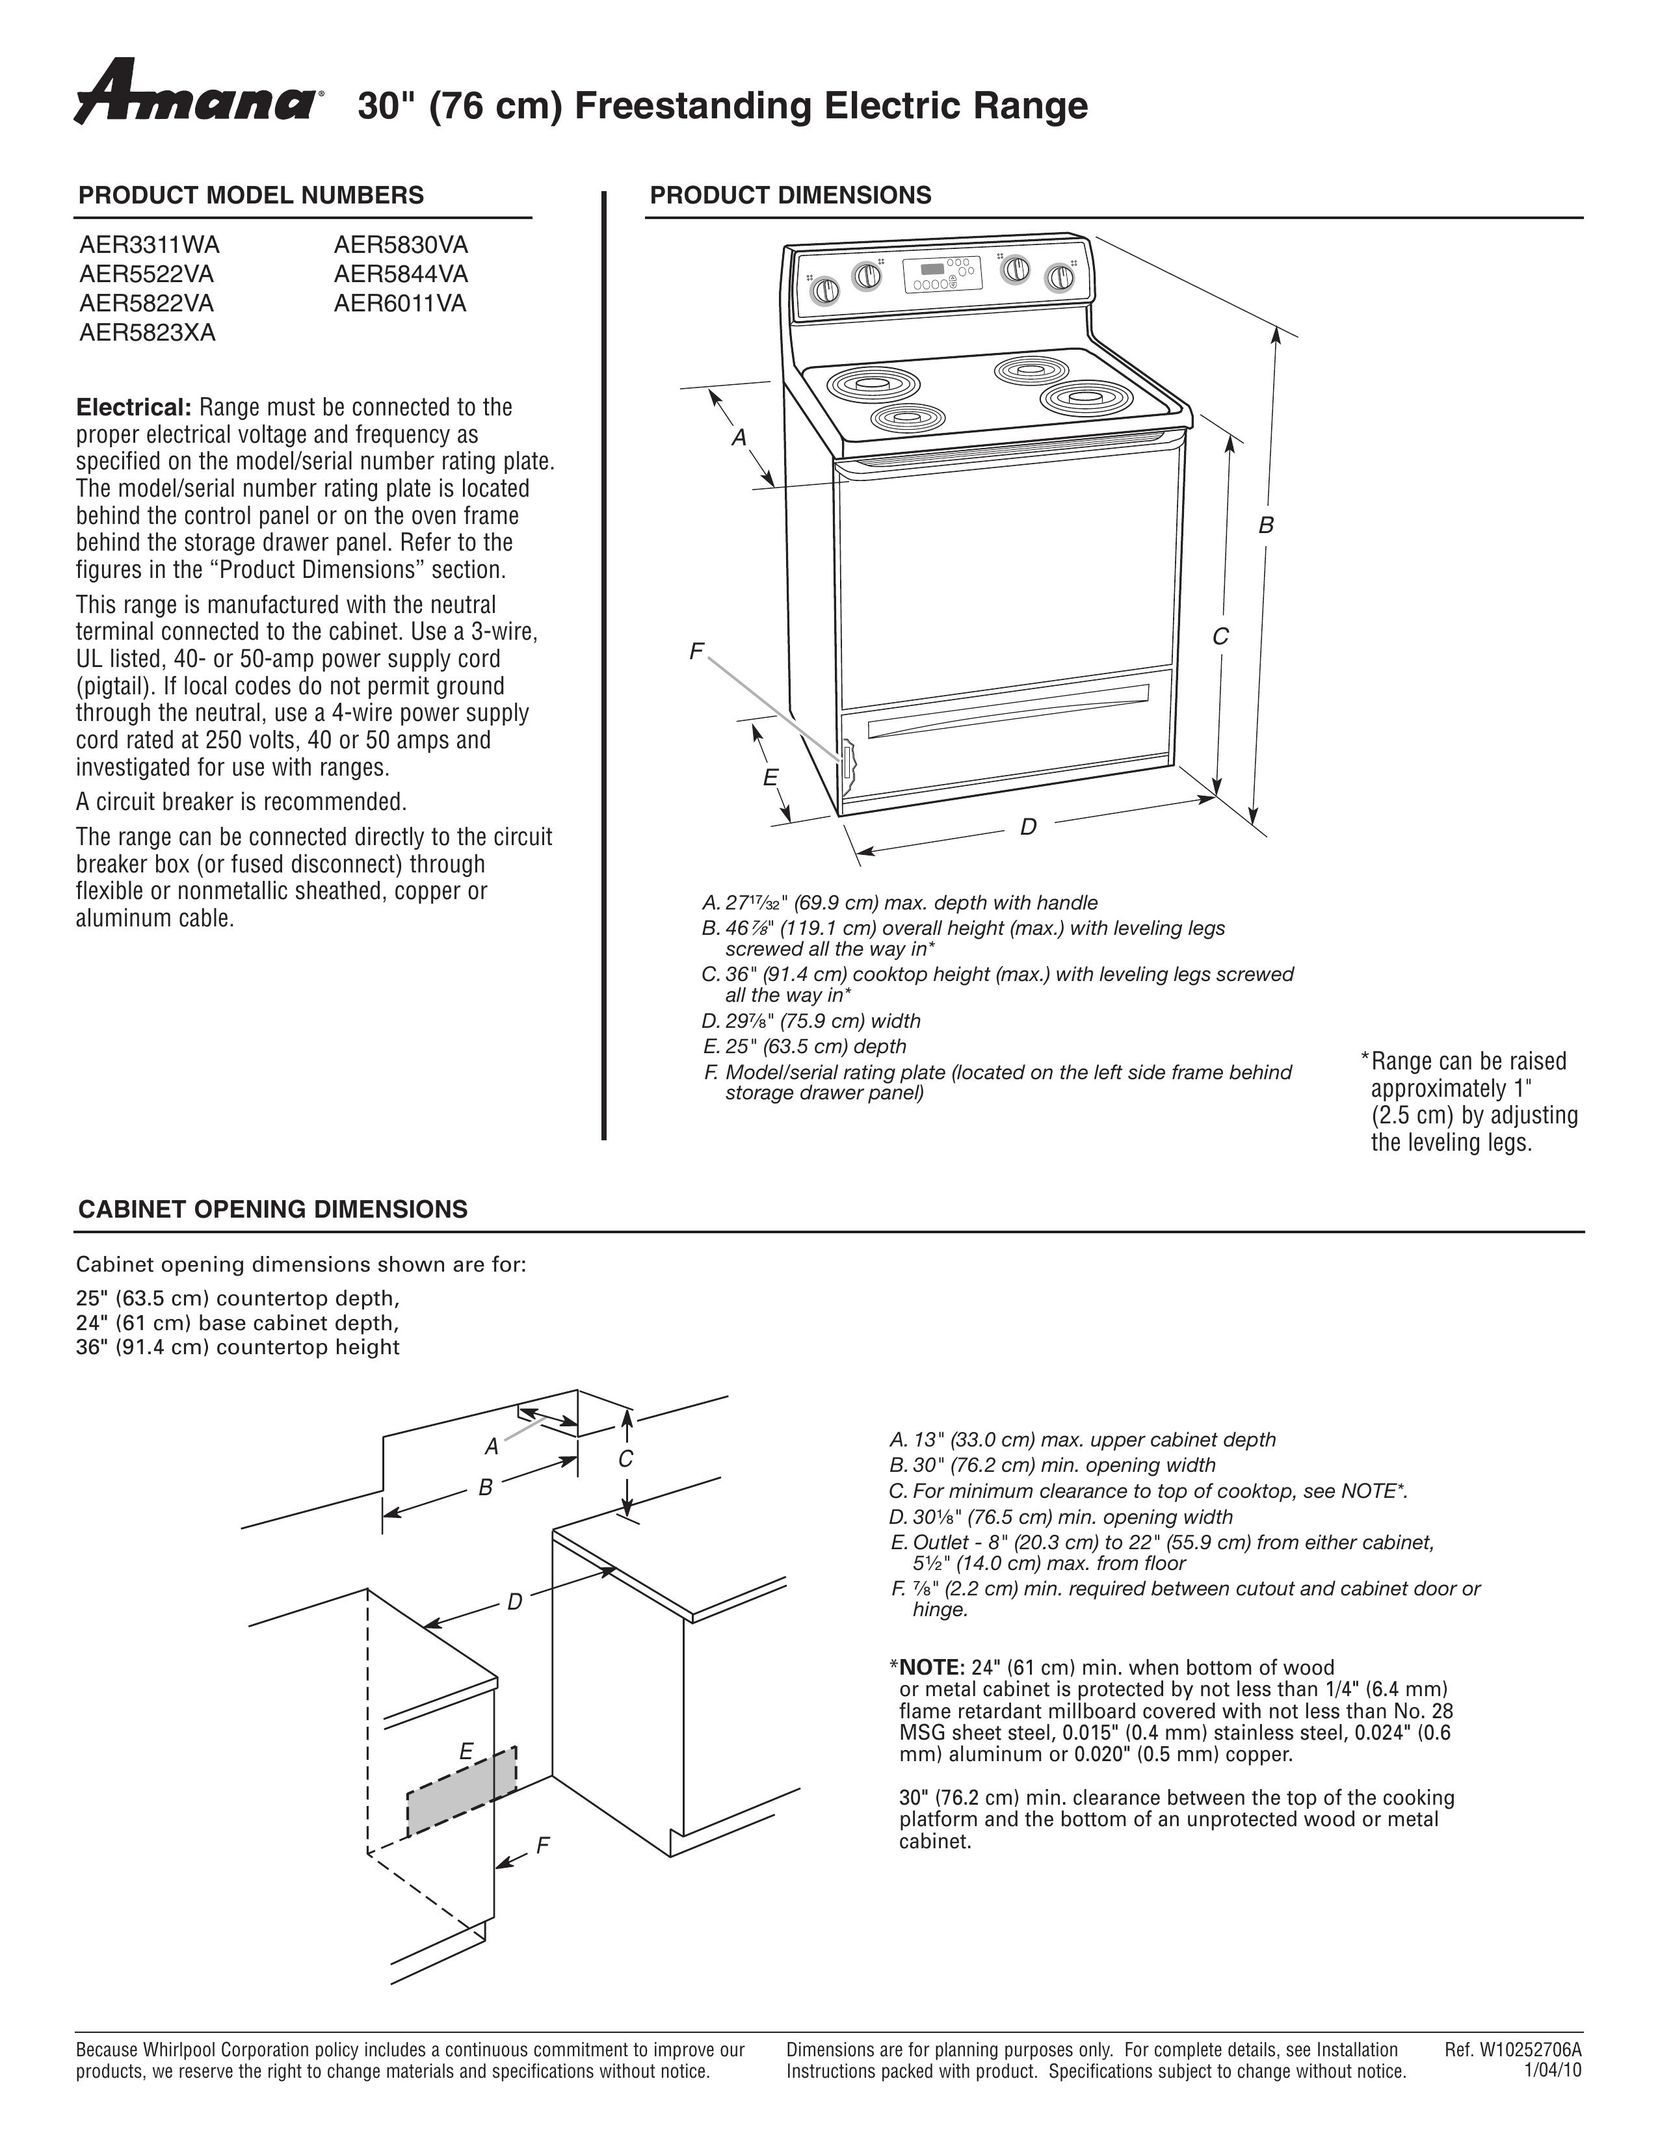 Amana AER3311WA Range User Manual